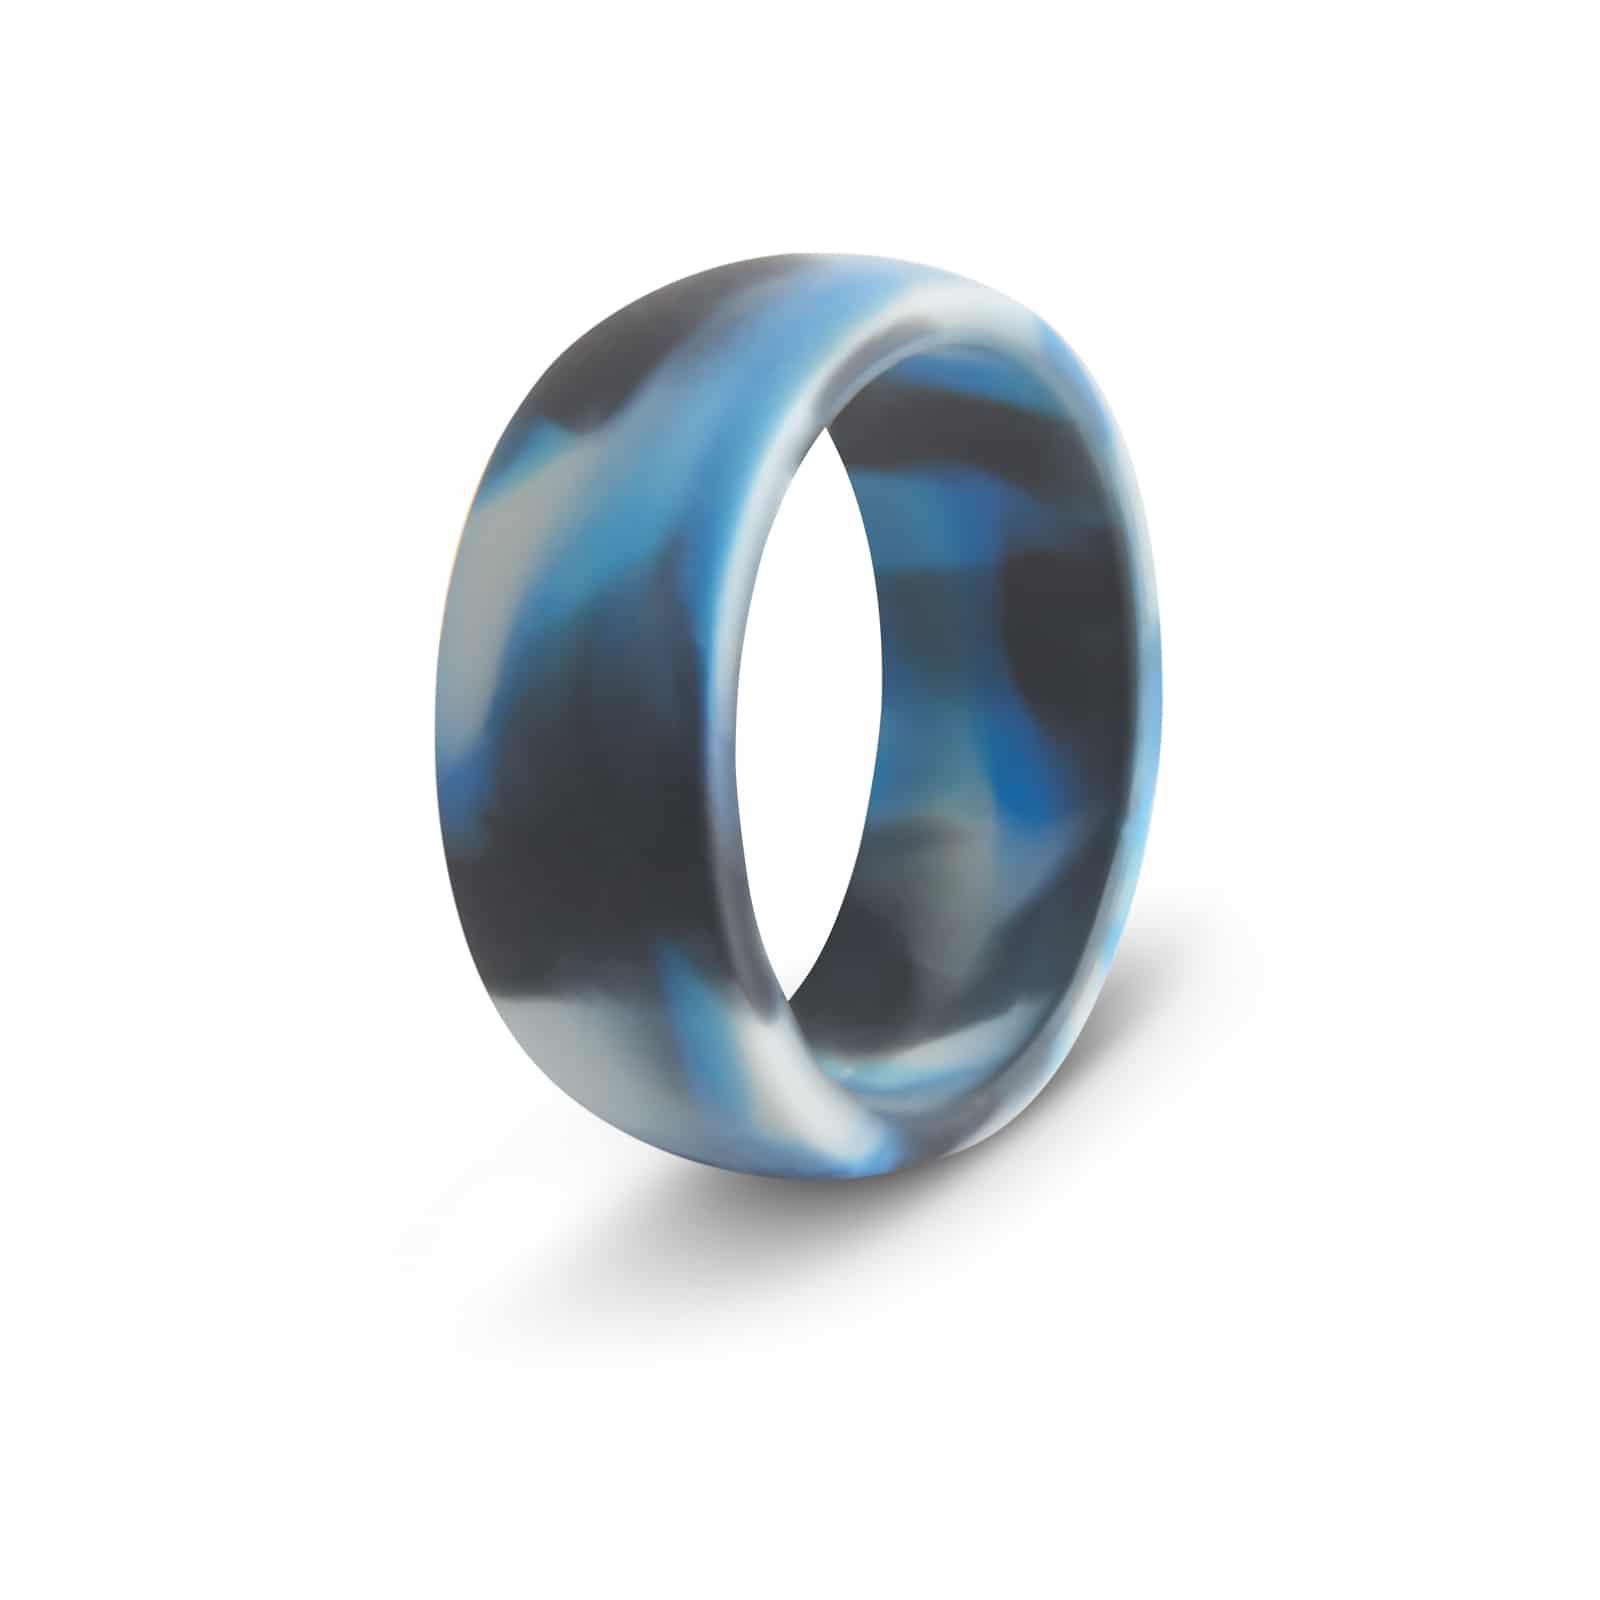 BOTTHMS Ocean Flow Silicone Ring in Blue & Black - Men's Wedding Band